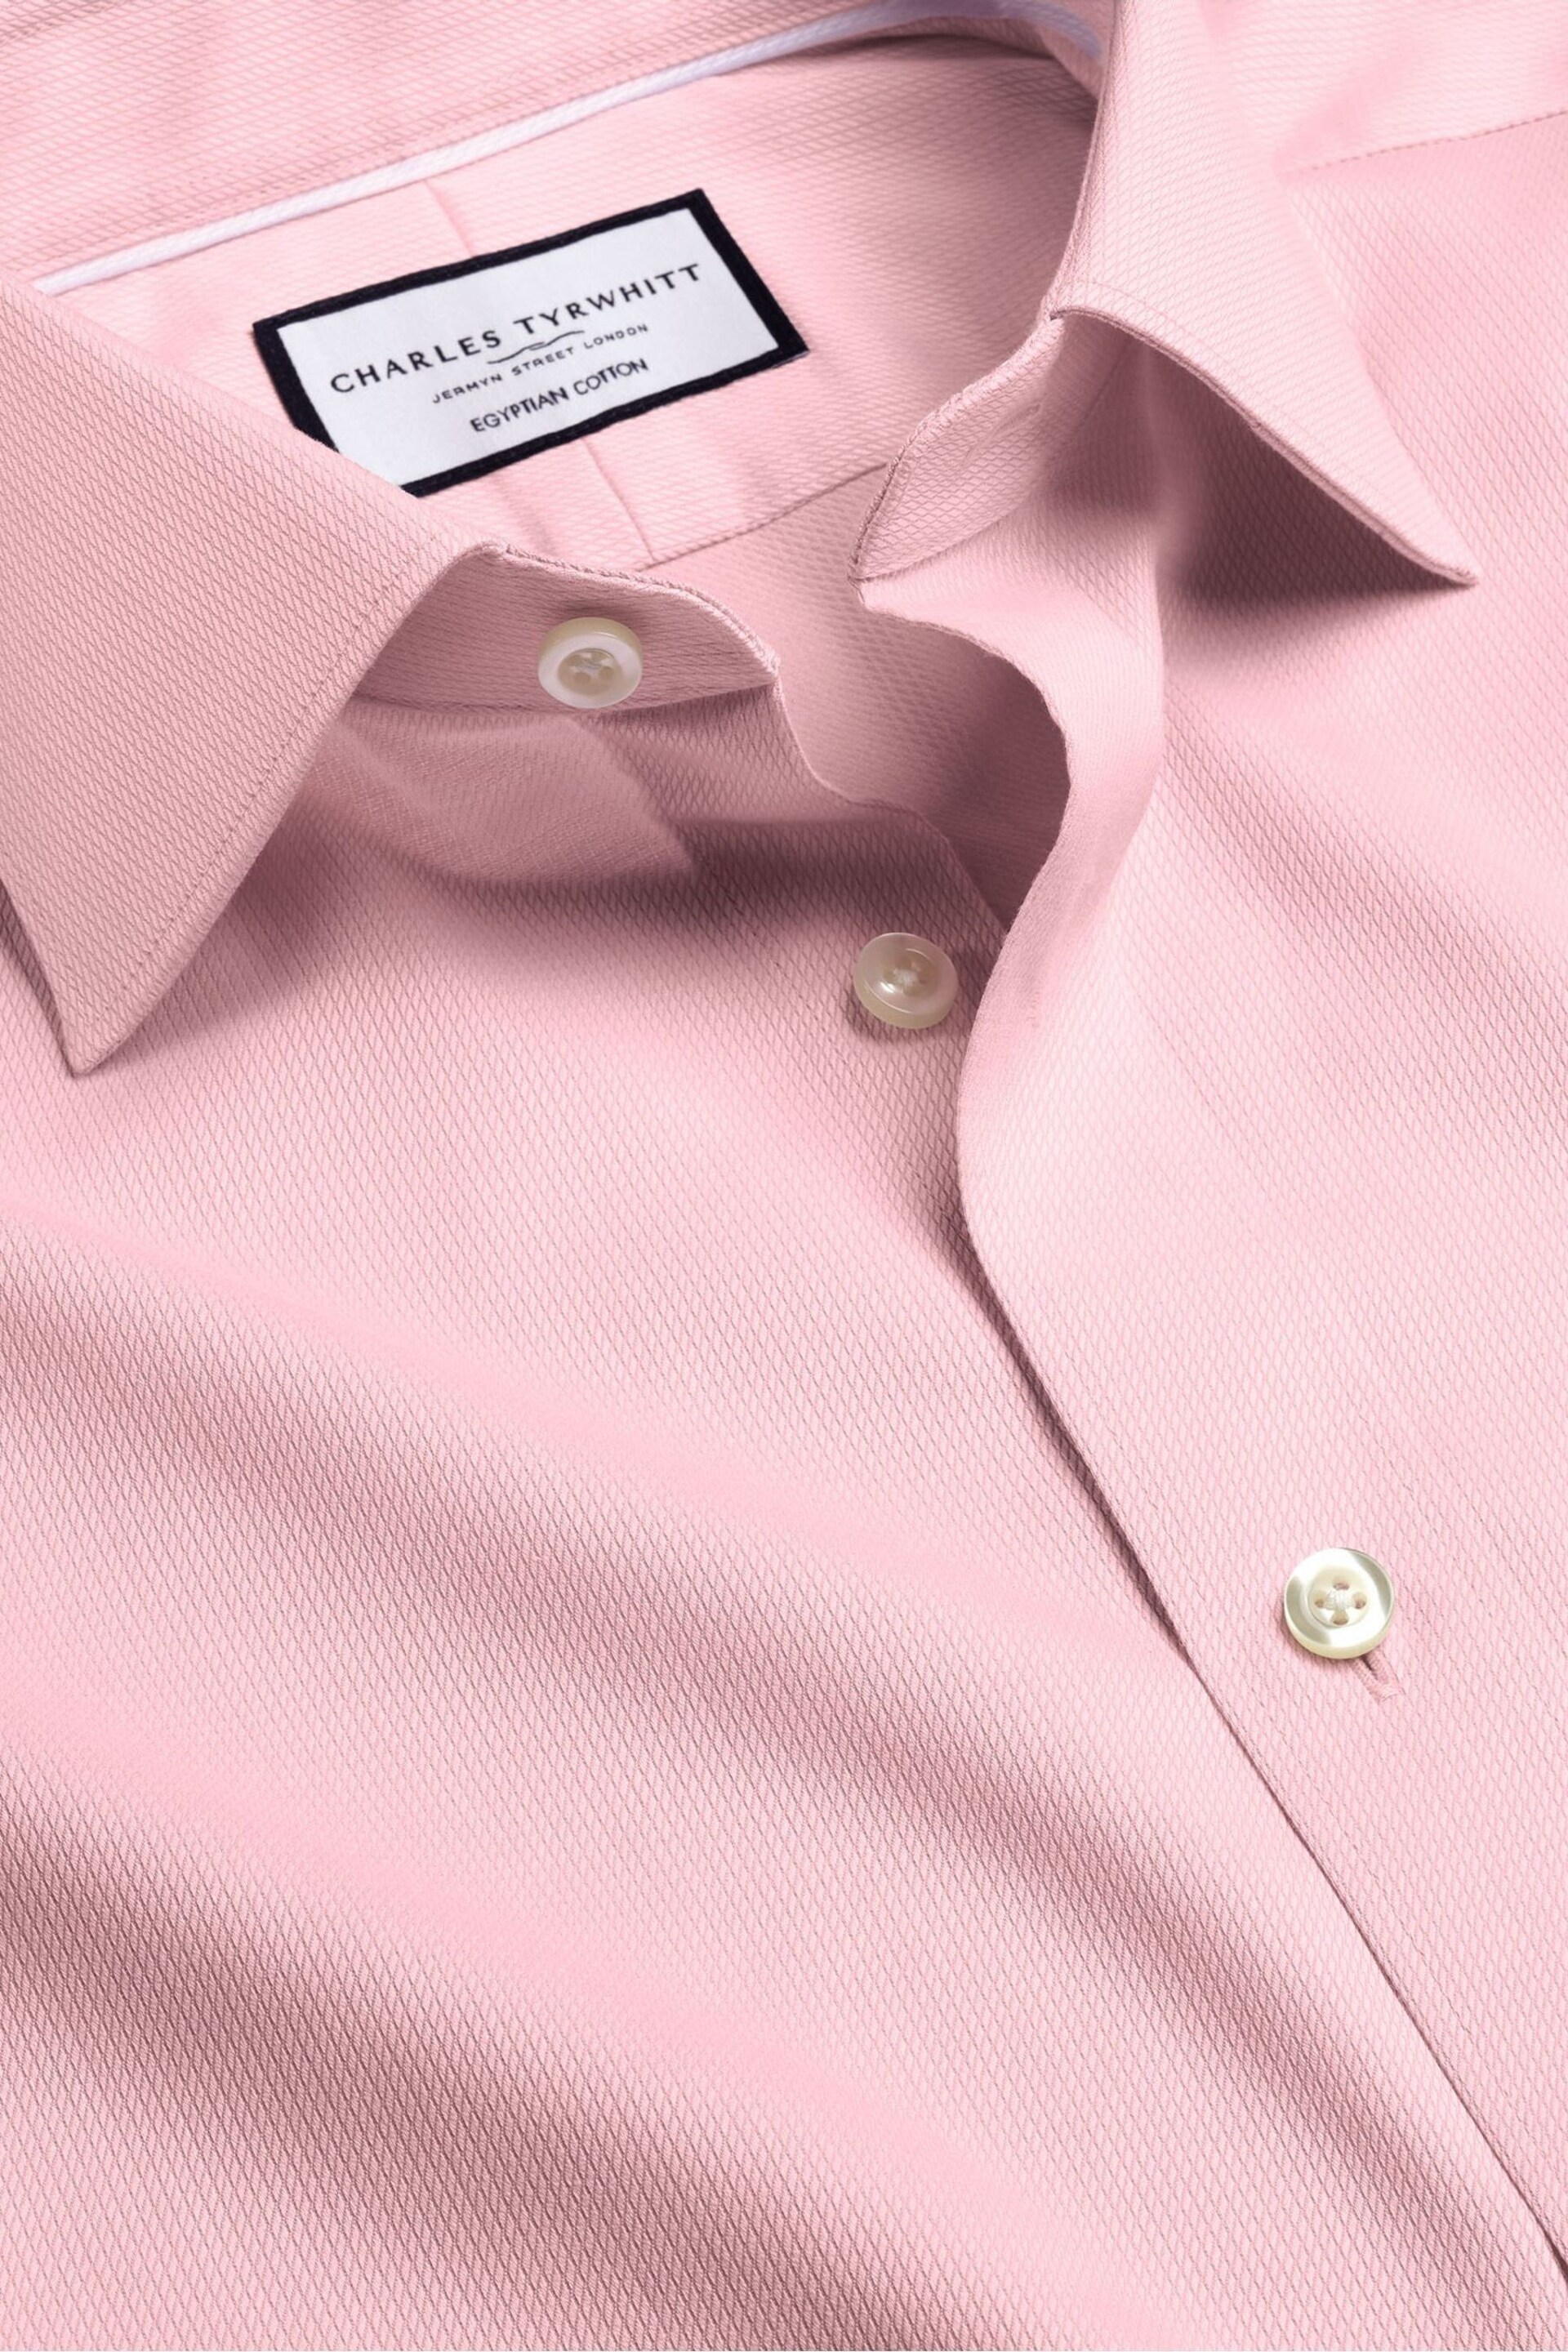 Charles Tyrwhitt Pink Egyptian Cotton Windsor Weave Slim Fit Shirt - Image 5 of 6